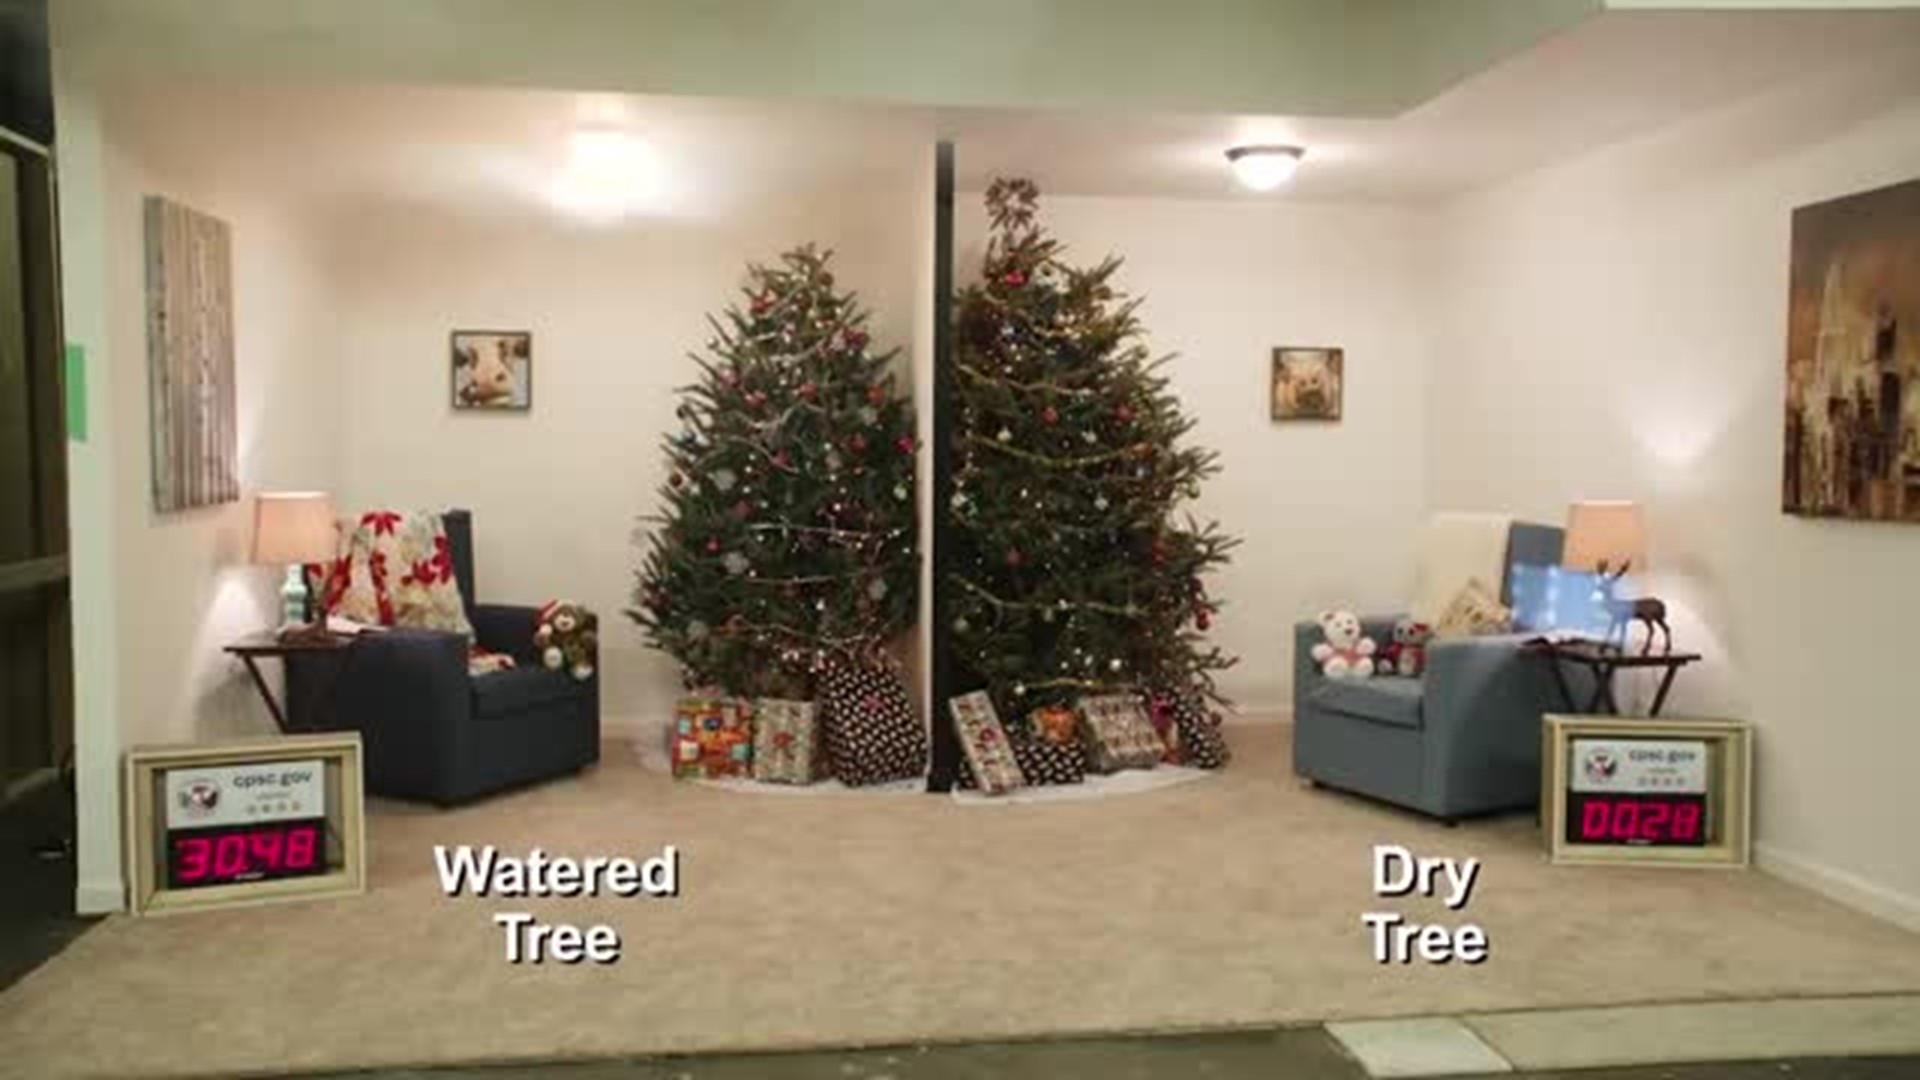 Dry Christmas Tree vs Well Watered Christmas Tree 2018.mp4